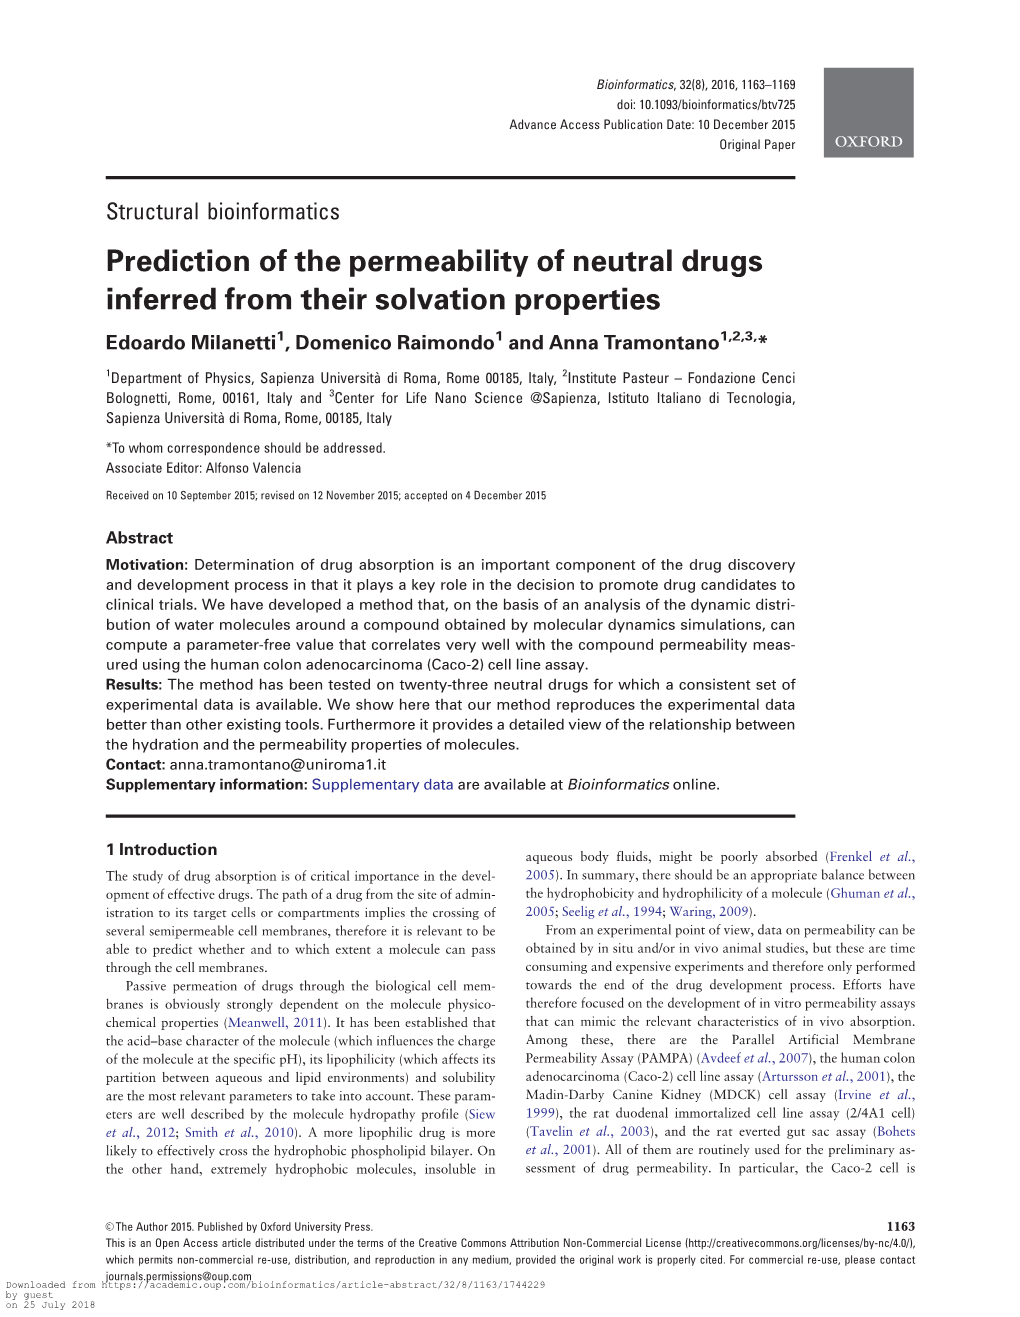 Prediction of the Permeability of Neutral Drugs Inferred from Their Solvation Properties Edoardo Milanetti1, Domenico Raimondo1 and Anna Tramontano1,2,3,*